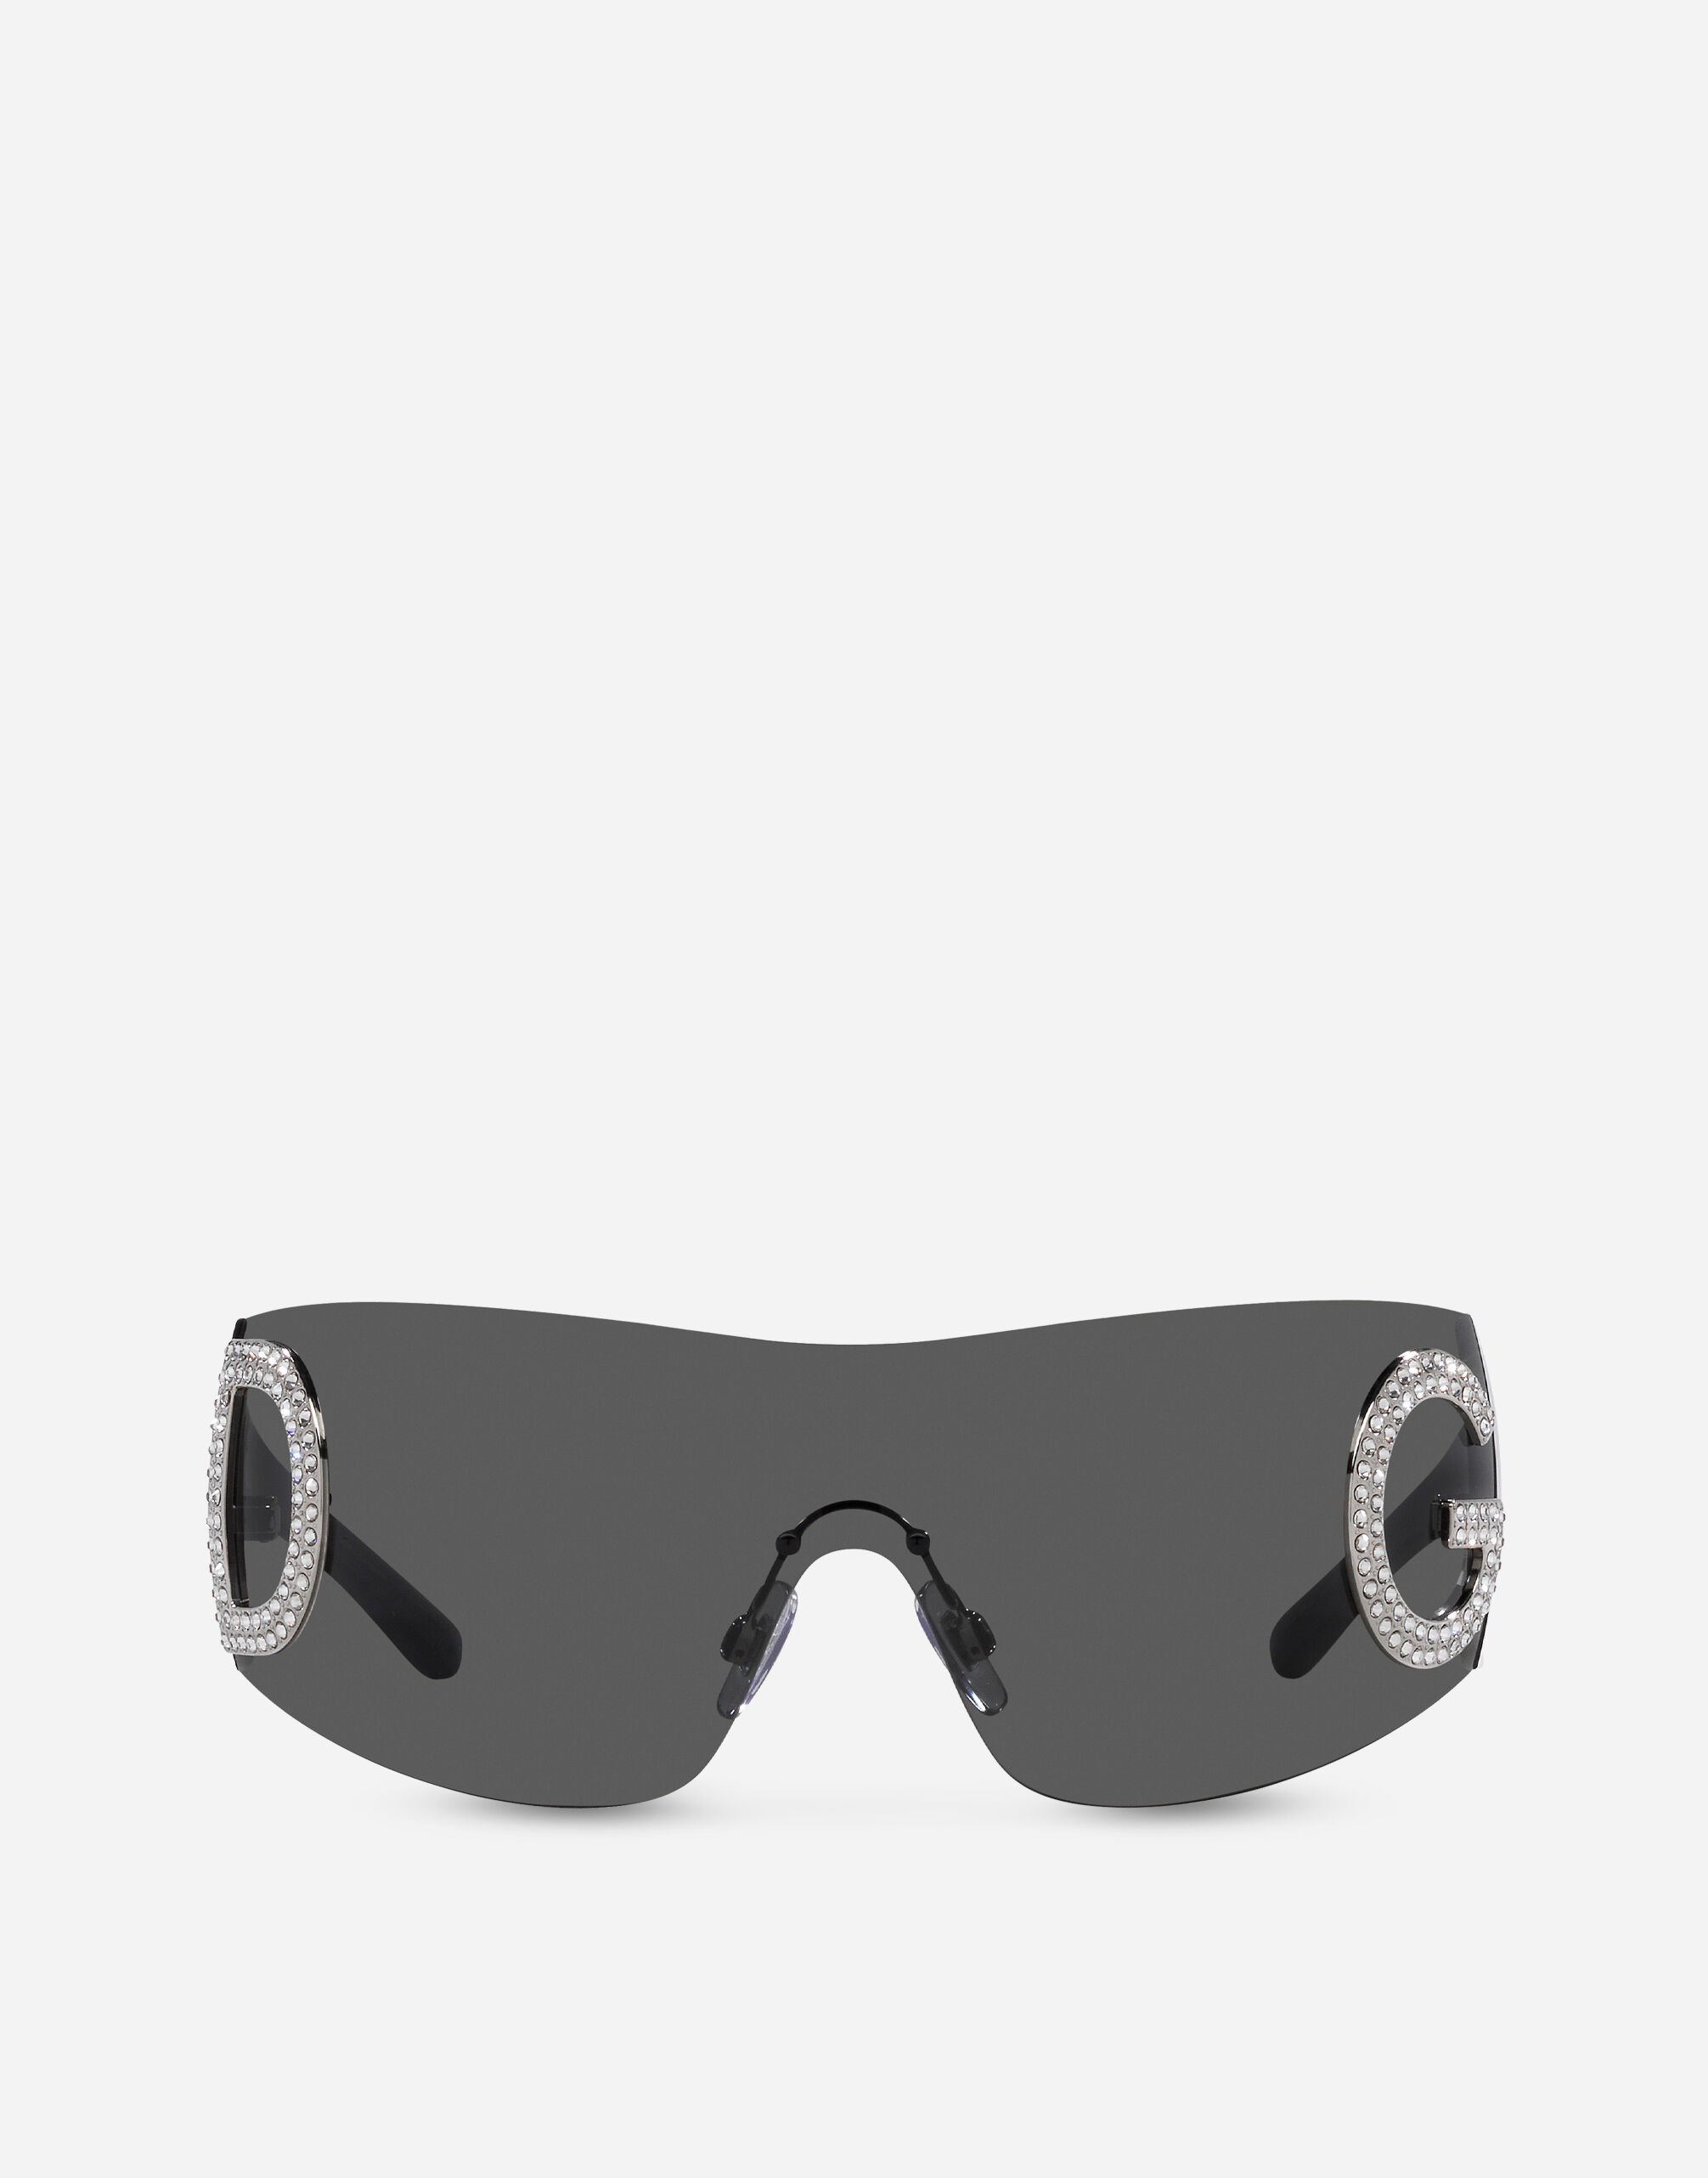 Dolce & Gabbana Re-Edition sunglasses Black VG443FVP187